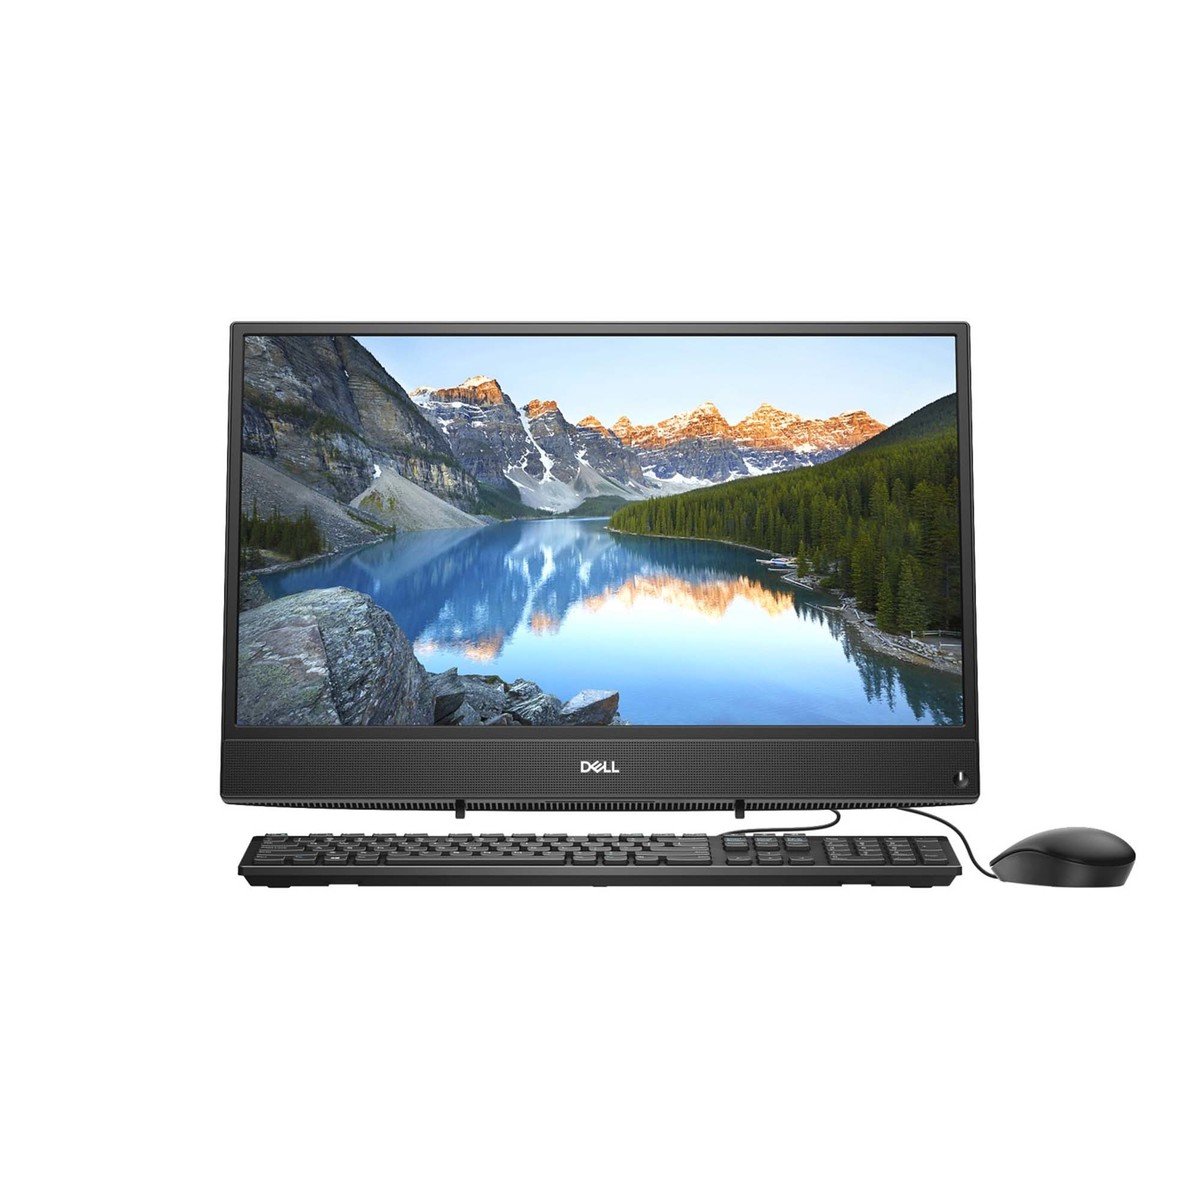 Dell All In One Desktop-3280-Corei3-8145U,4GBRAM,1TB HDD,21.5" FHD Multimedia Keyboard+ Optical Mouse,Windows 10 Home,Black